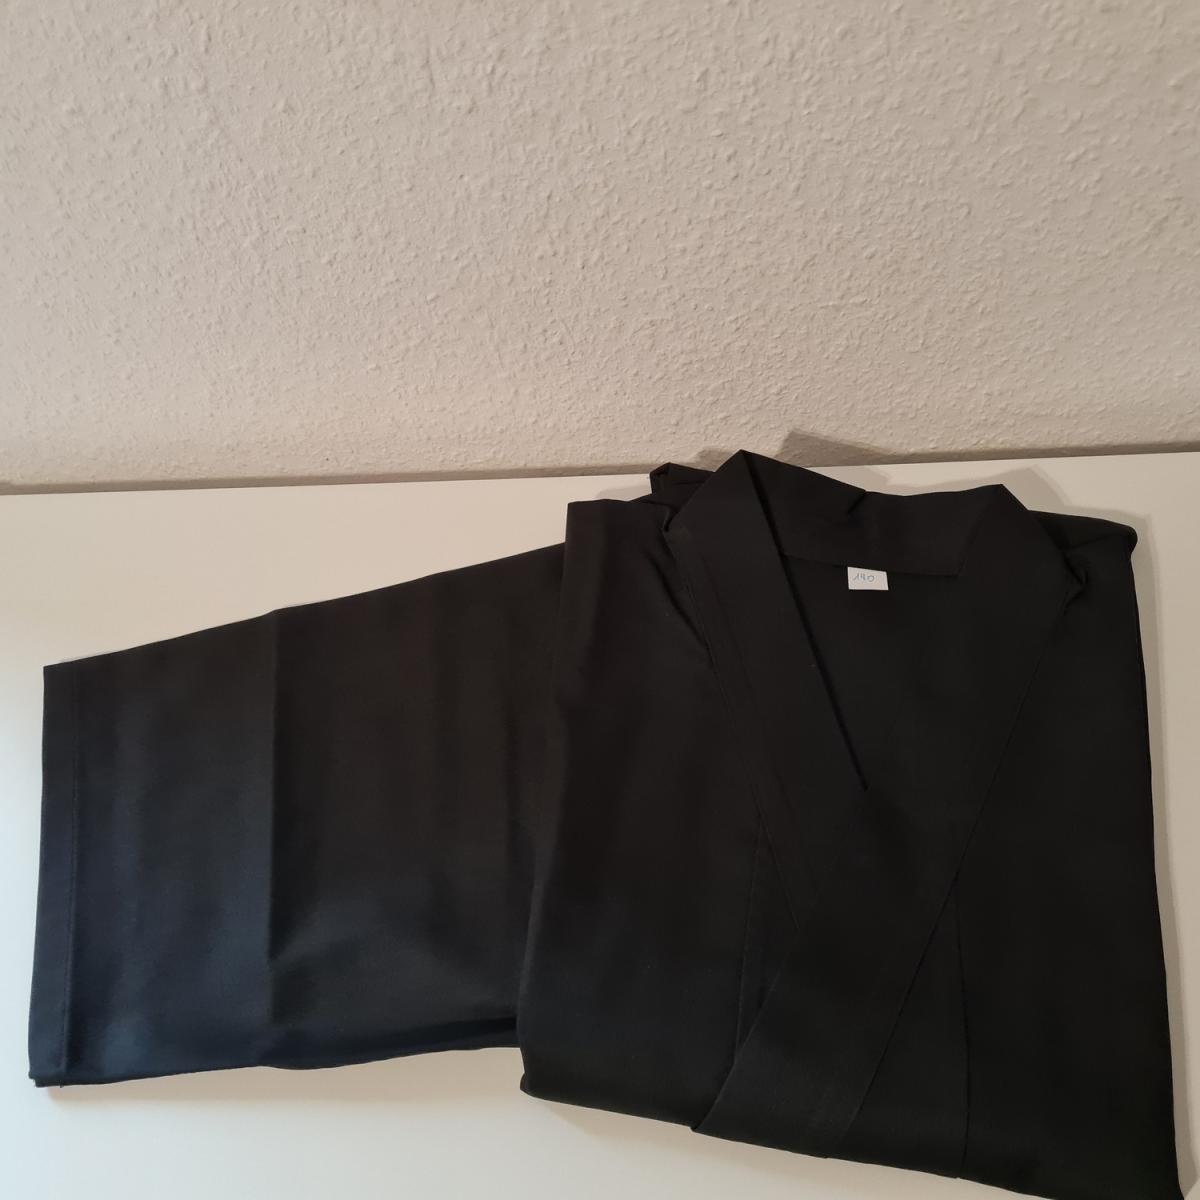 Gi made of cotton - fabric color black - size 190 cm ➤ www.bokken-shop.de. Gi suitable for Iaido, Aikdo, Kendo, Jodo. Your Budo dealer!